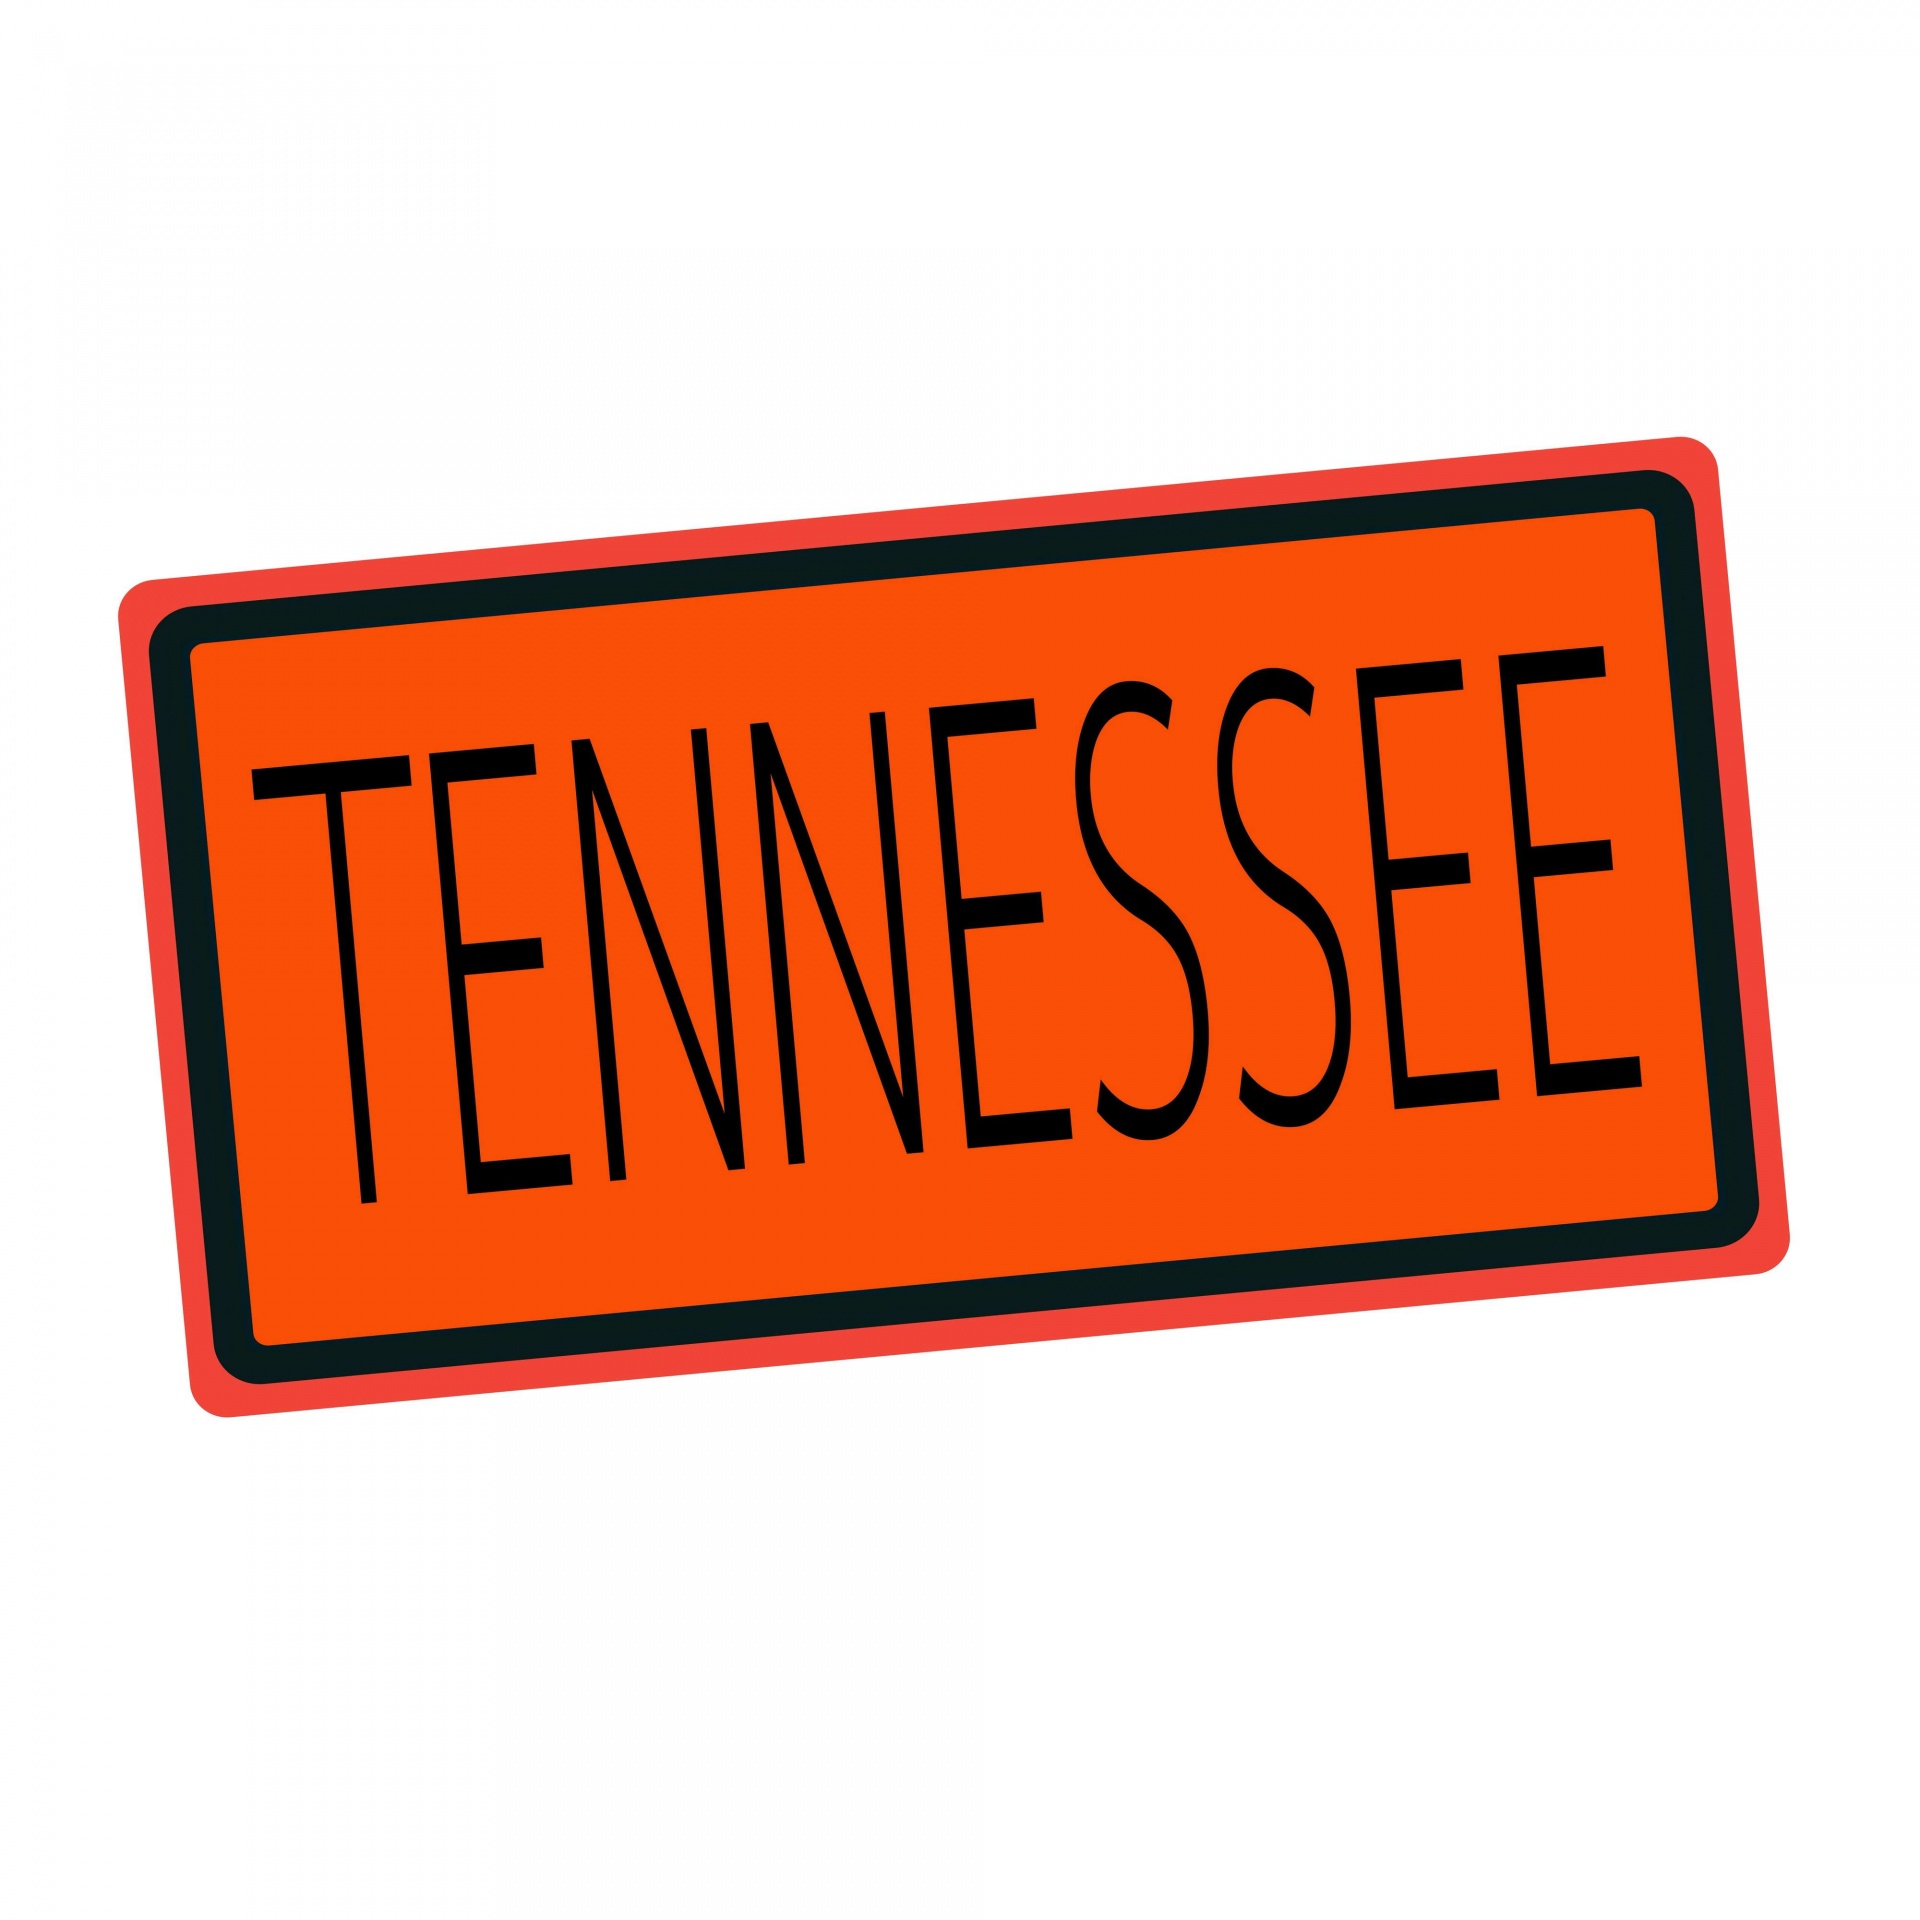 Tennessee zwarte stempel tekst op oranje